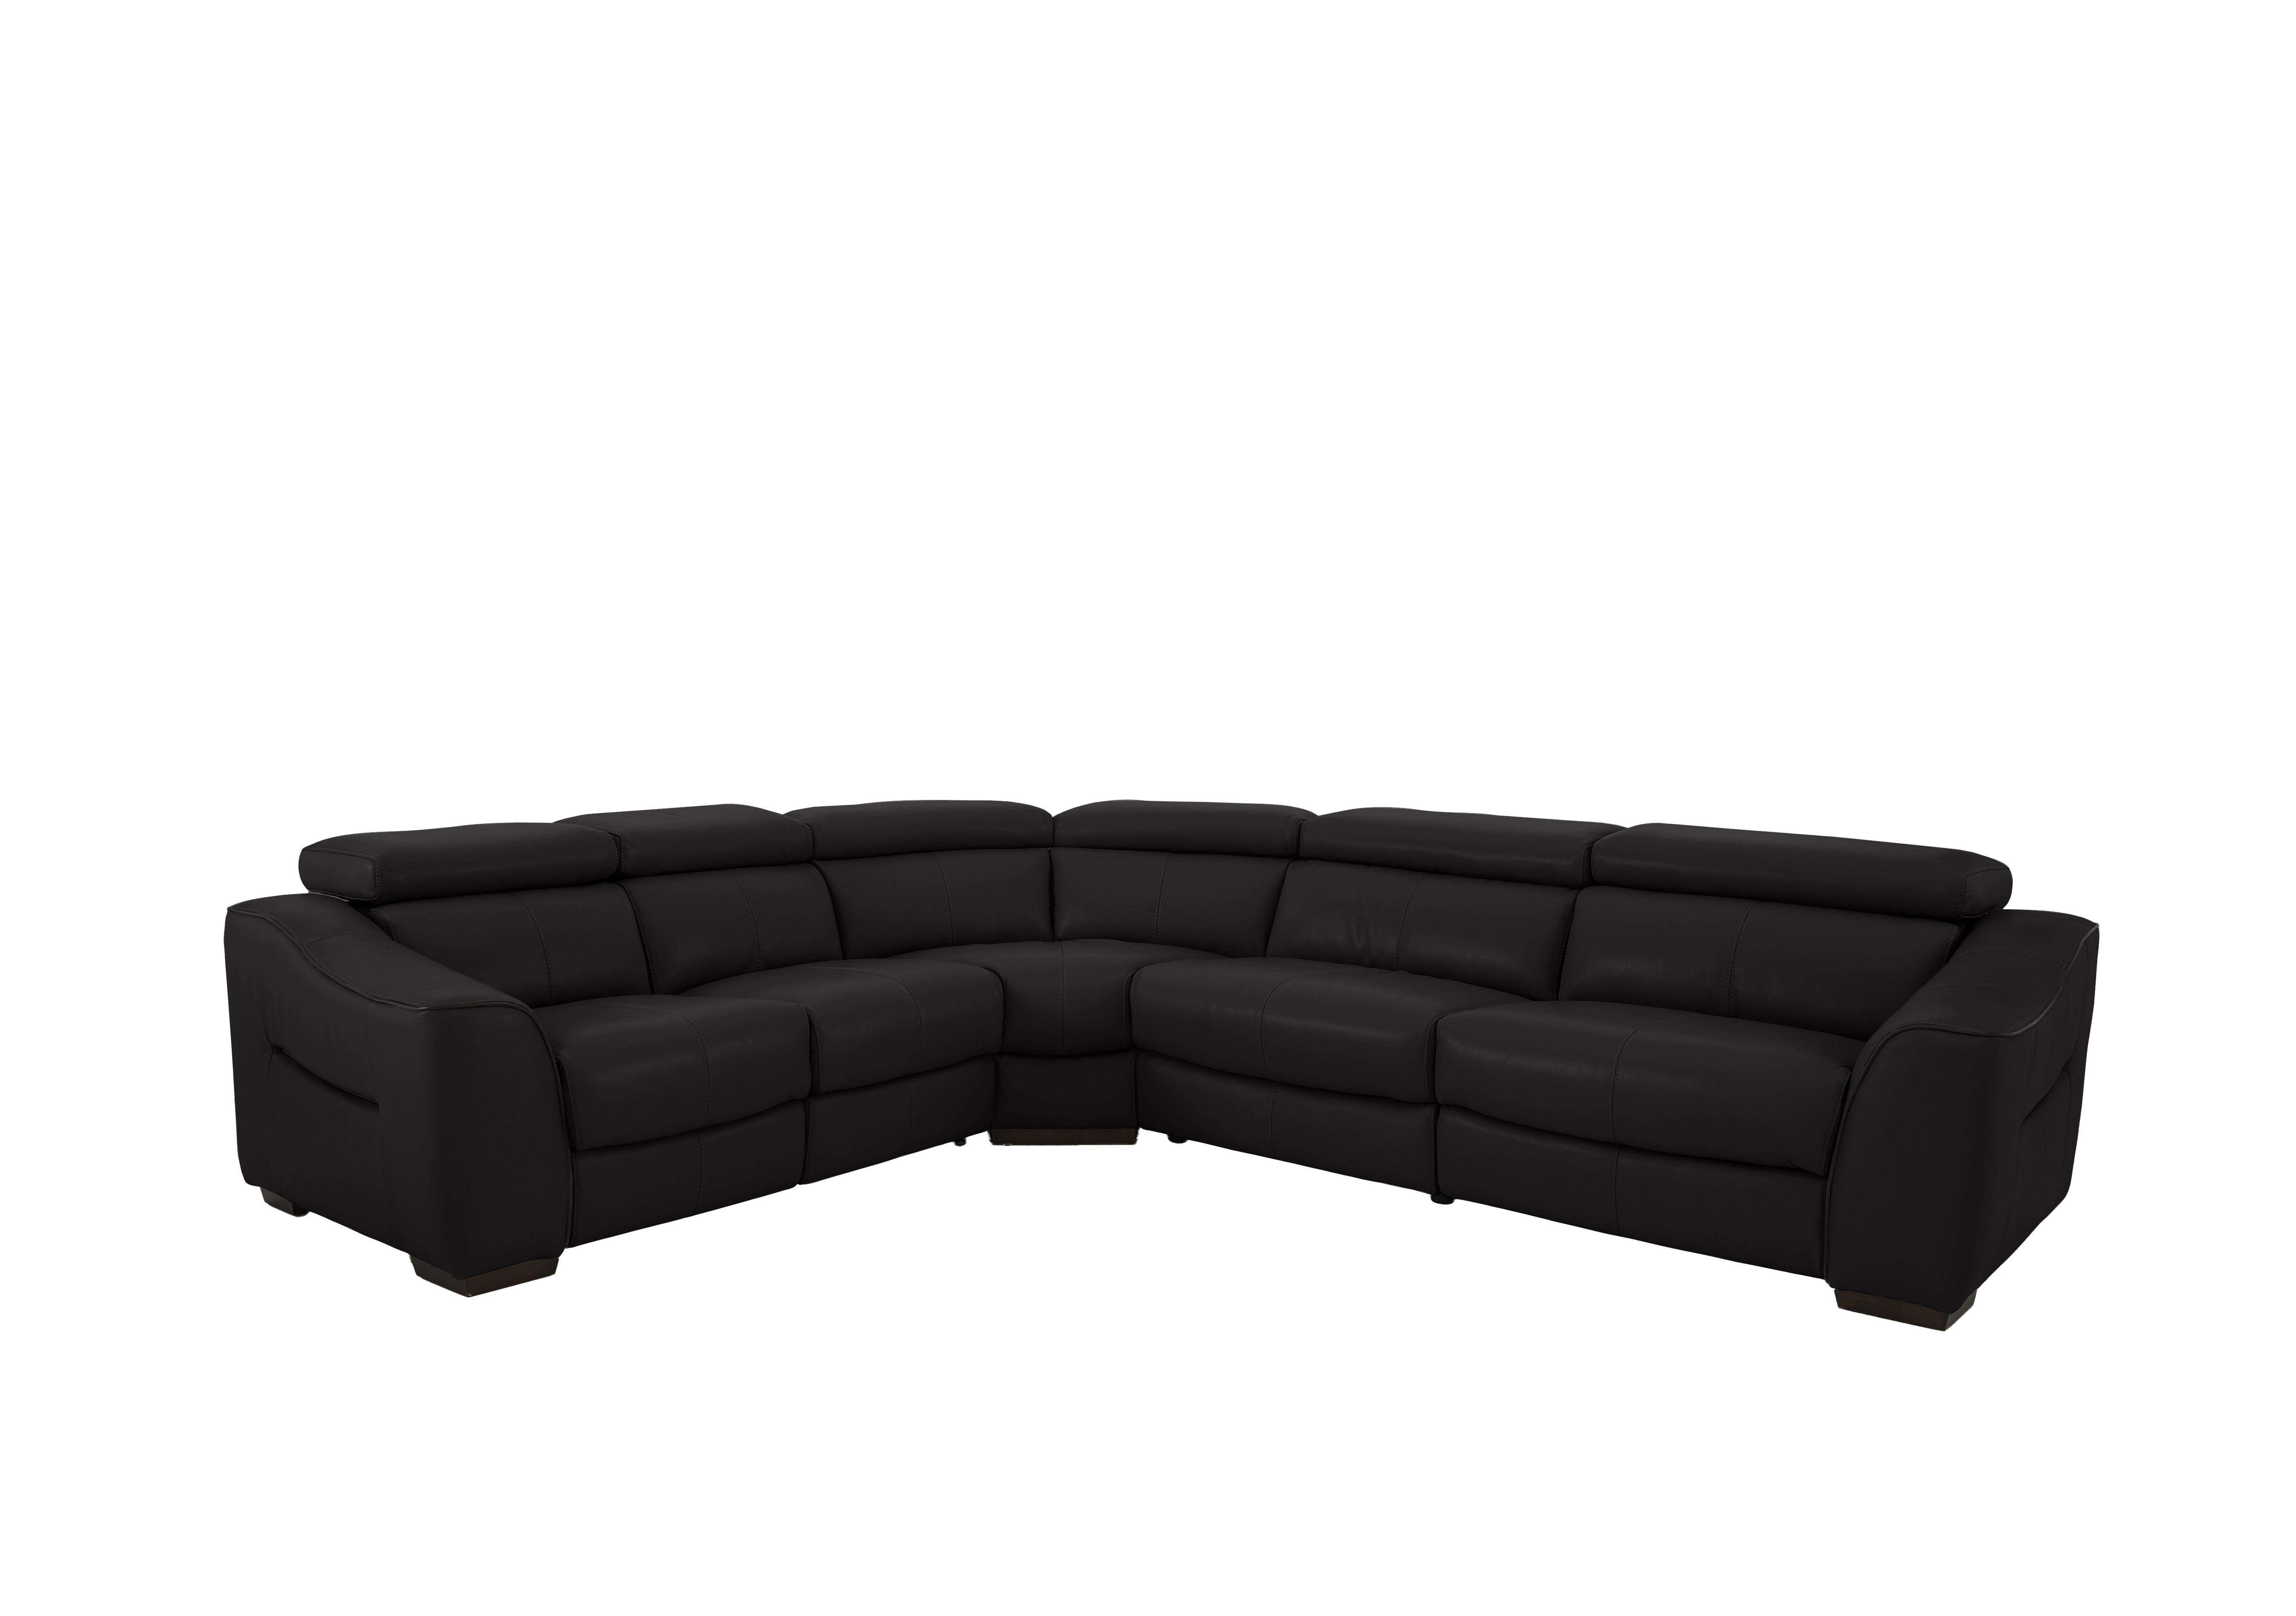 Elixir Leather Power Recliner Corner Sofa in Bv-3500 Classic Black on Furniture Village